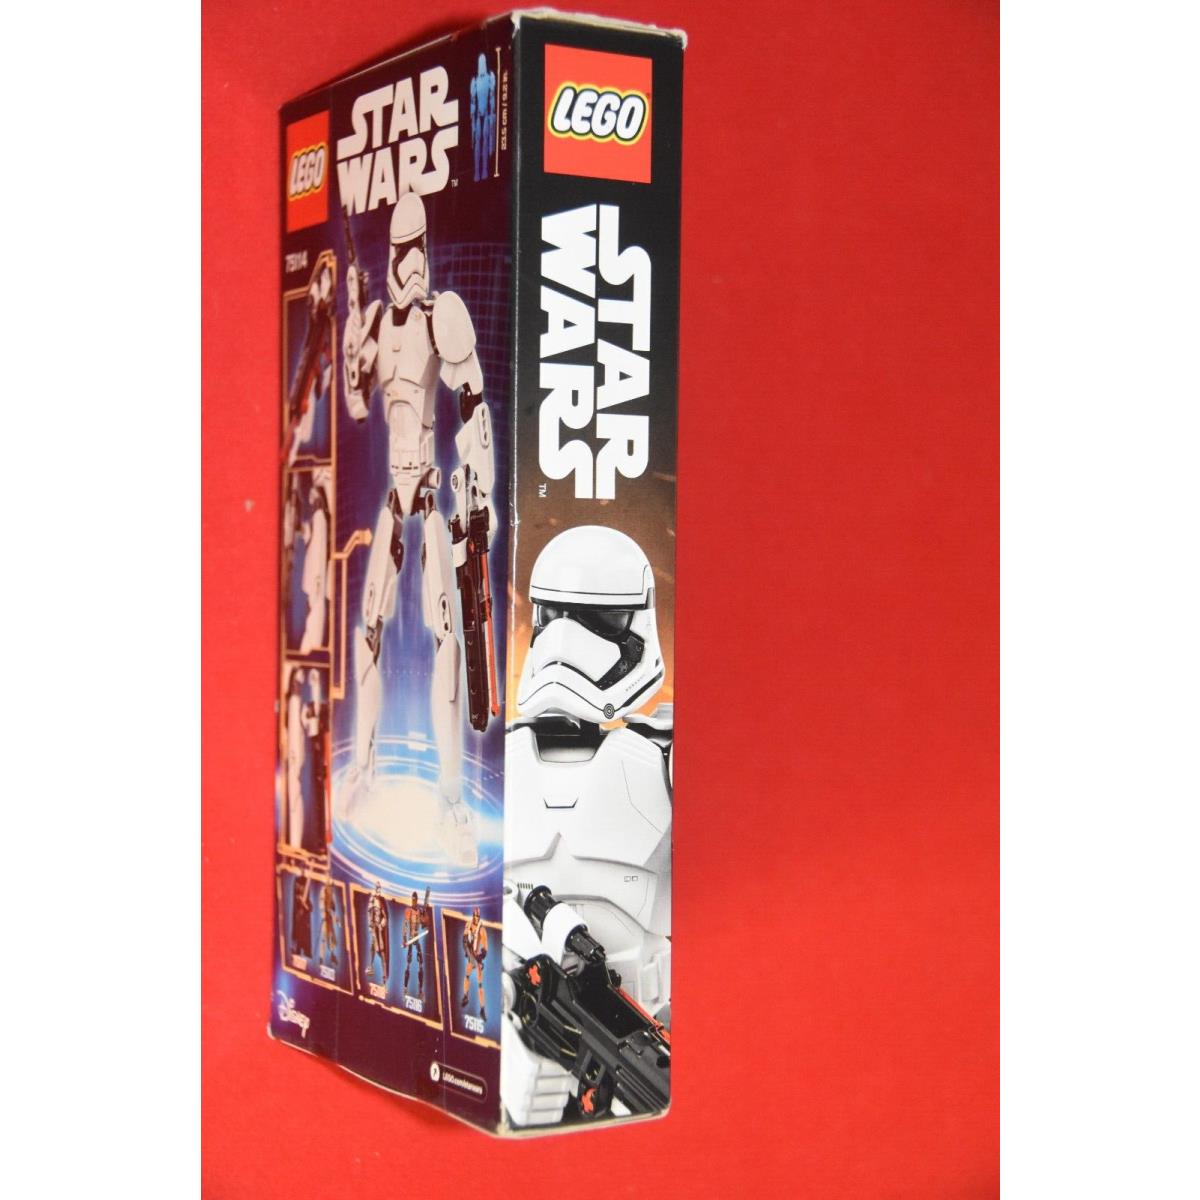 2016 Lego Star Wars Buildable Figure First Order Stormtrooper Set 75114